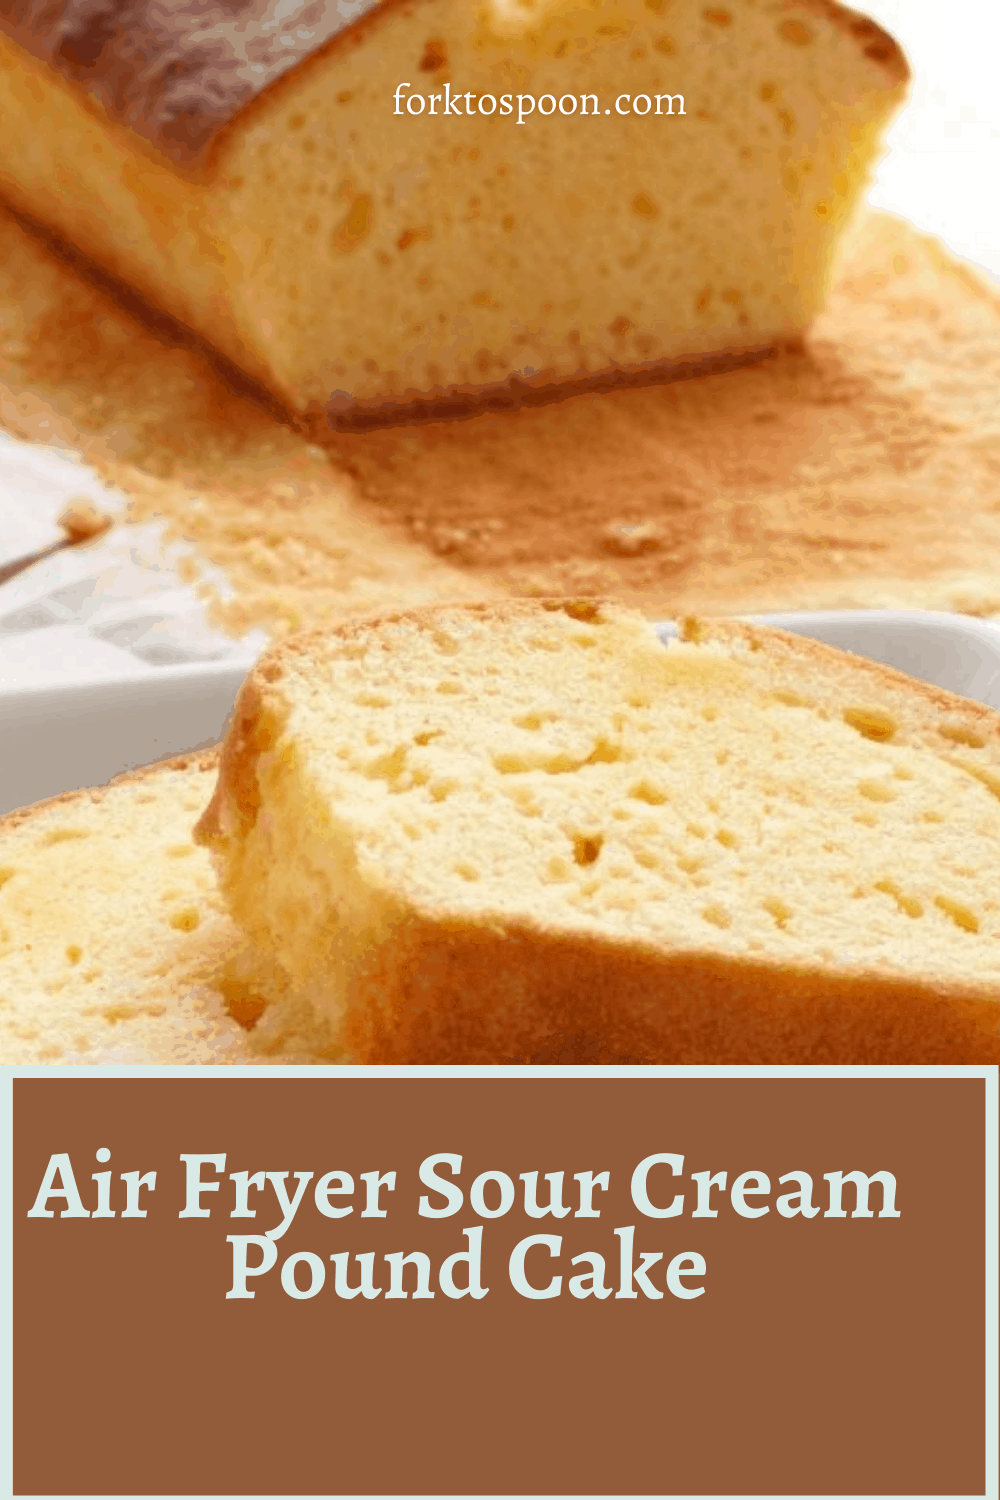 Air Fryer Sour Cream Pound Cake